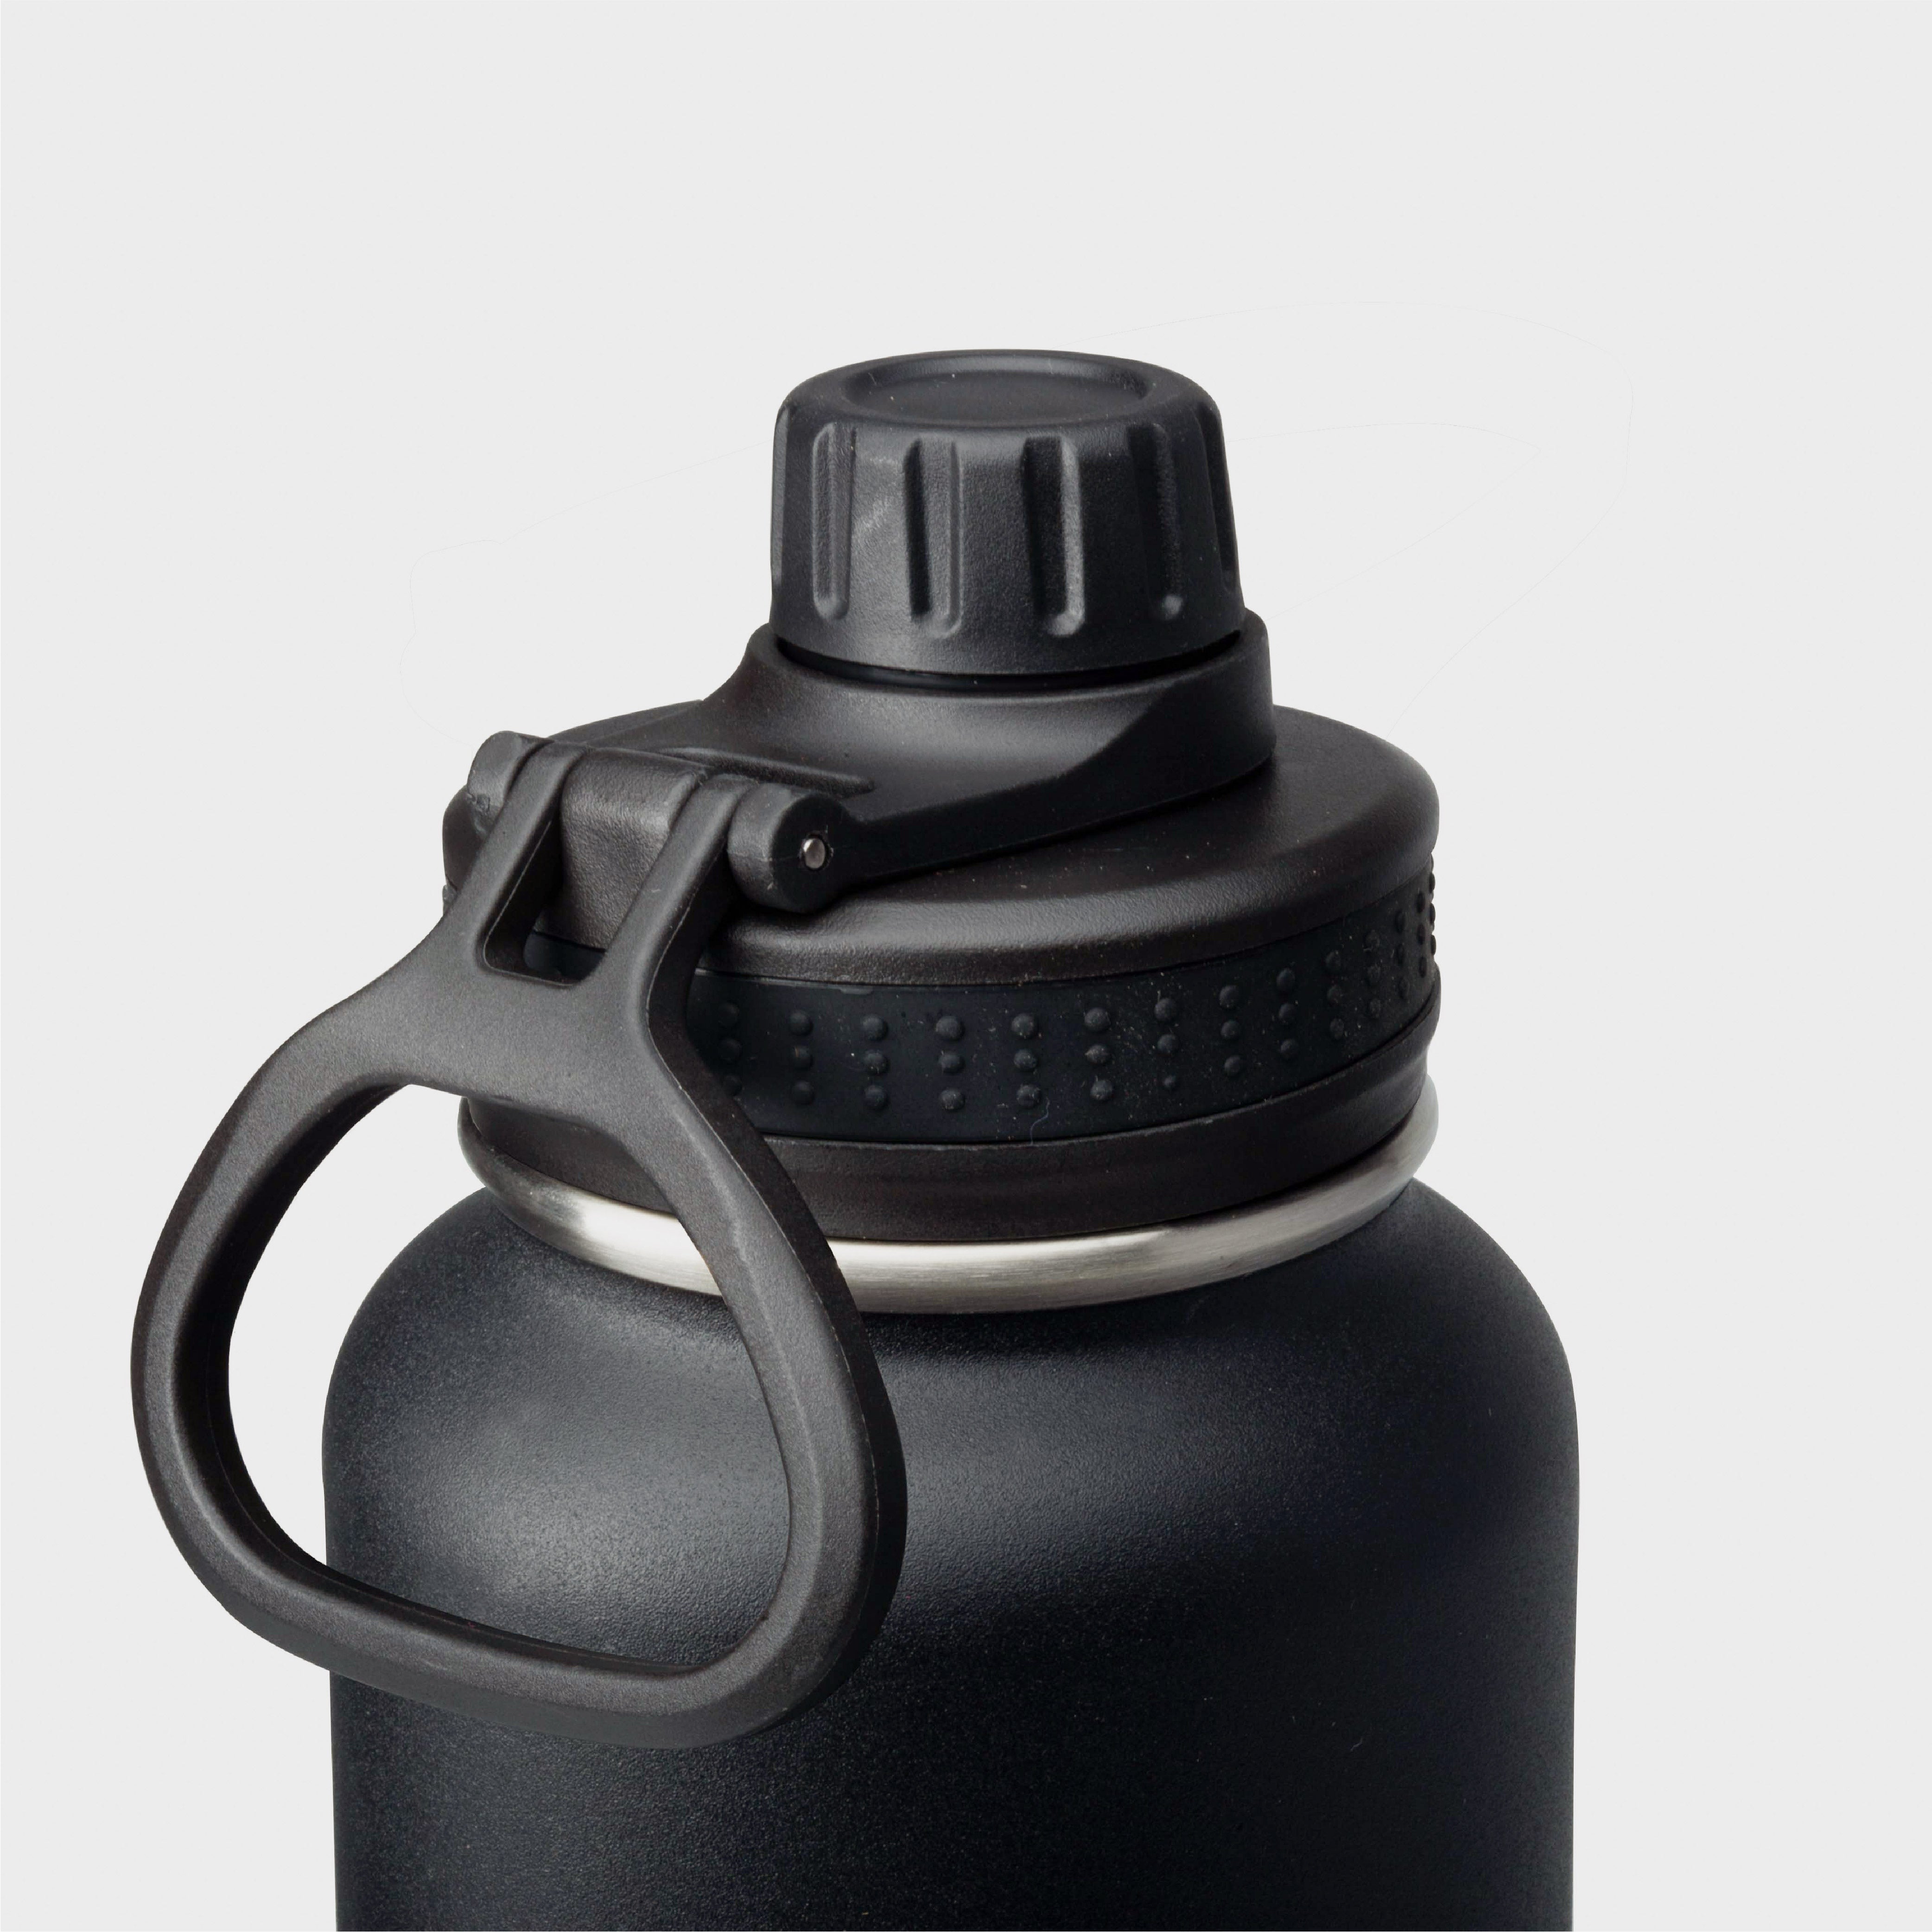 ZEUZ® Premium RVS Thermosfles & Drinkfles - 1,2 Liter